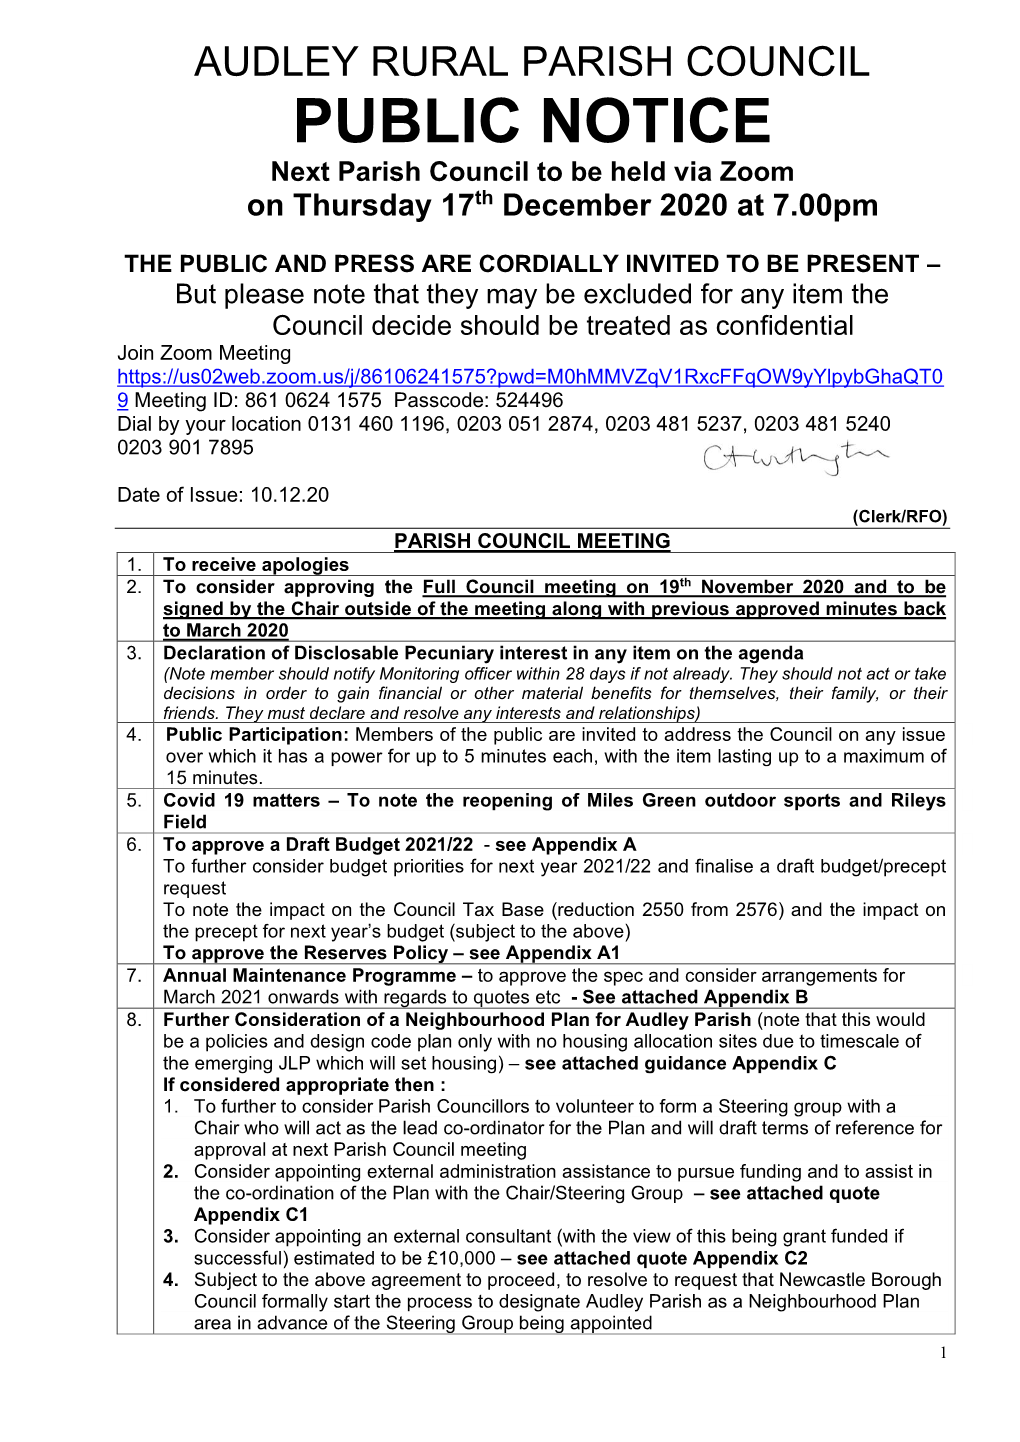 AUDLEY RURAL PARISH COUNCIL PUBLIC NOTICE Next Parish Council to Be Held Via Zoom on Thursday 17Th December 2020 at 7.00Pm